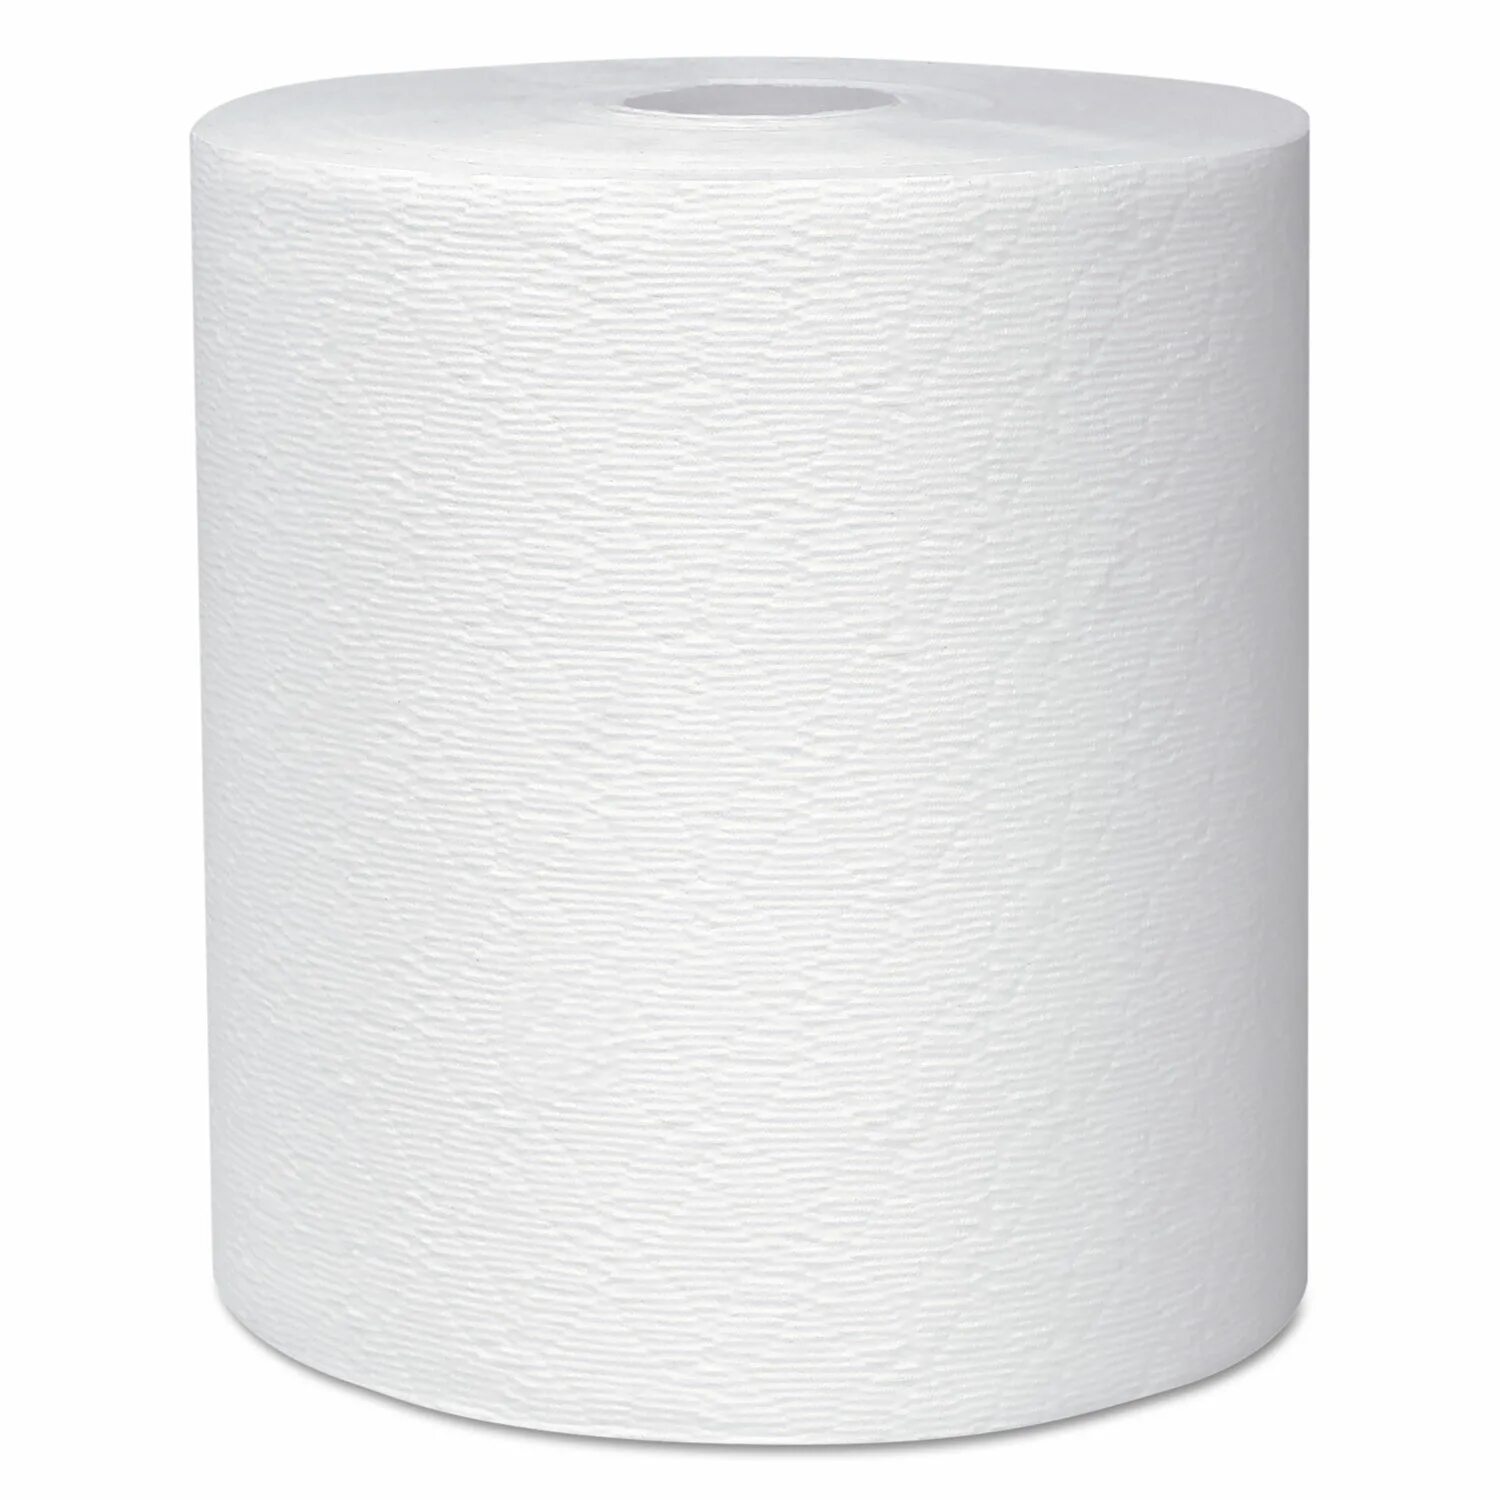 Roll 1 6. Салфетка Kimberly Clark марка: WYPALL l30, 7303 белые 300шт. Полотенца бумажные Lime Mini c центральной вытяжкой серые однослойные 265120. Полотенца бумажные (2 рулона/уп). Текстура бумажного полотенца.